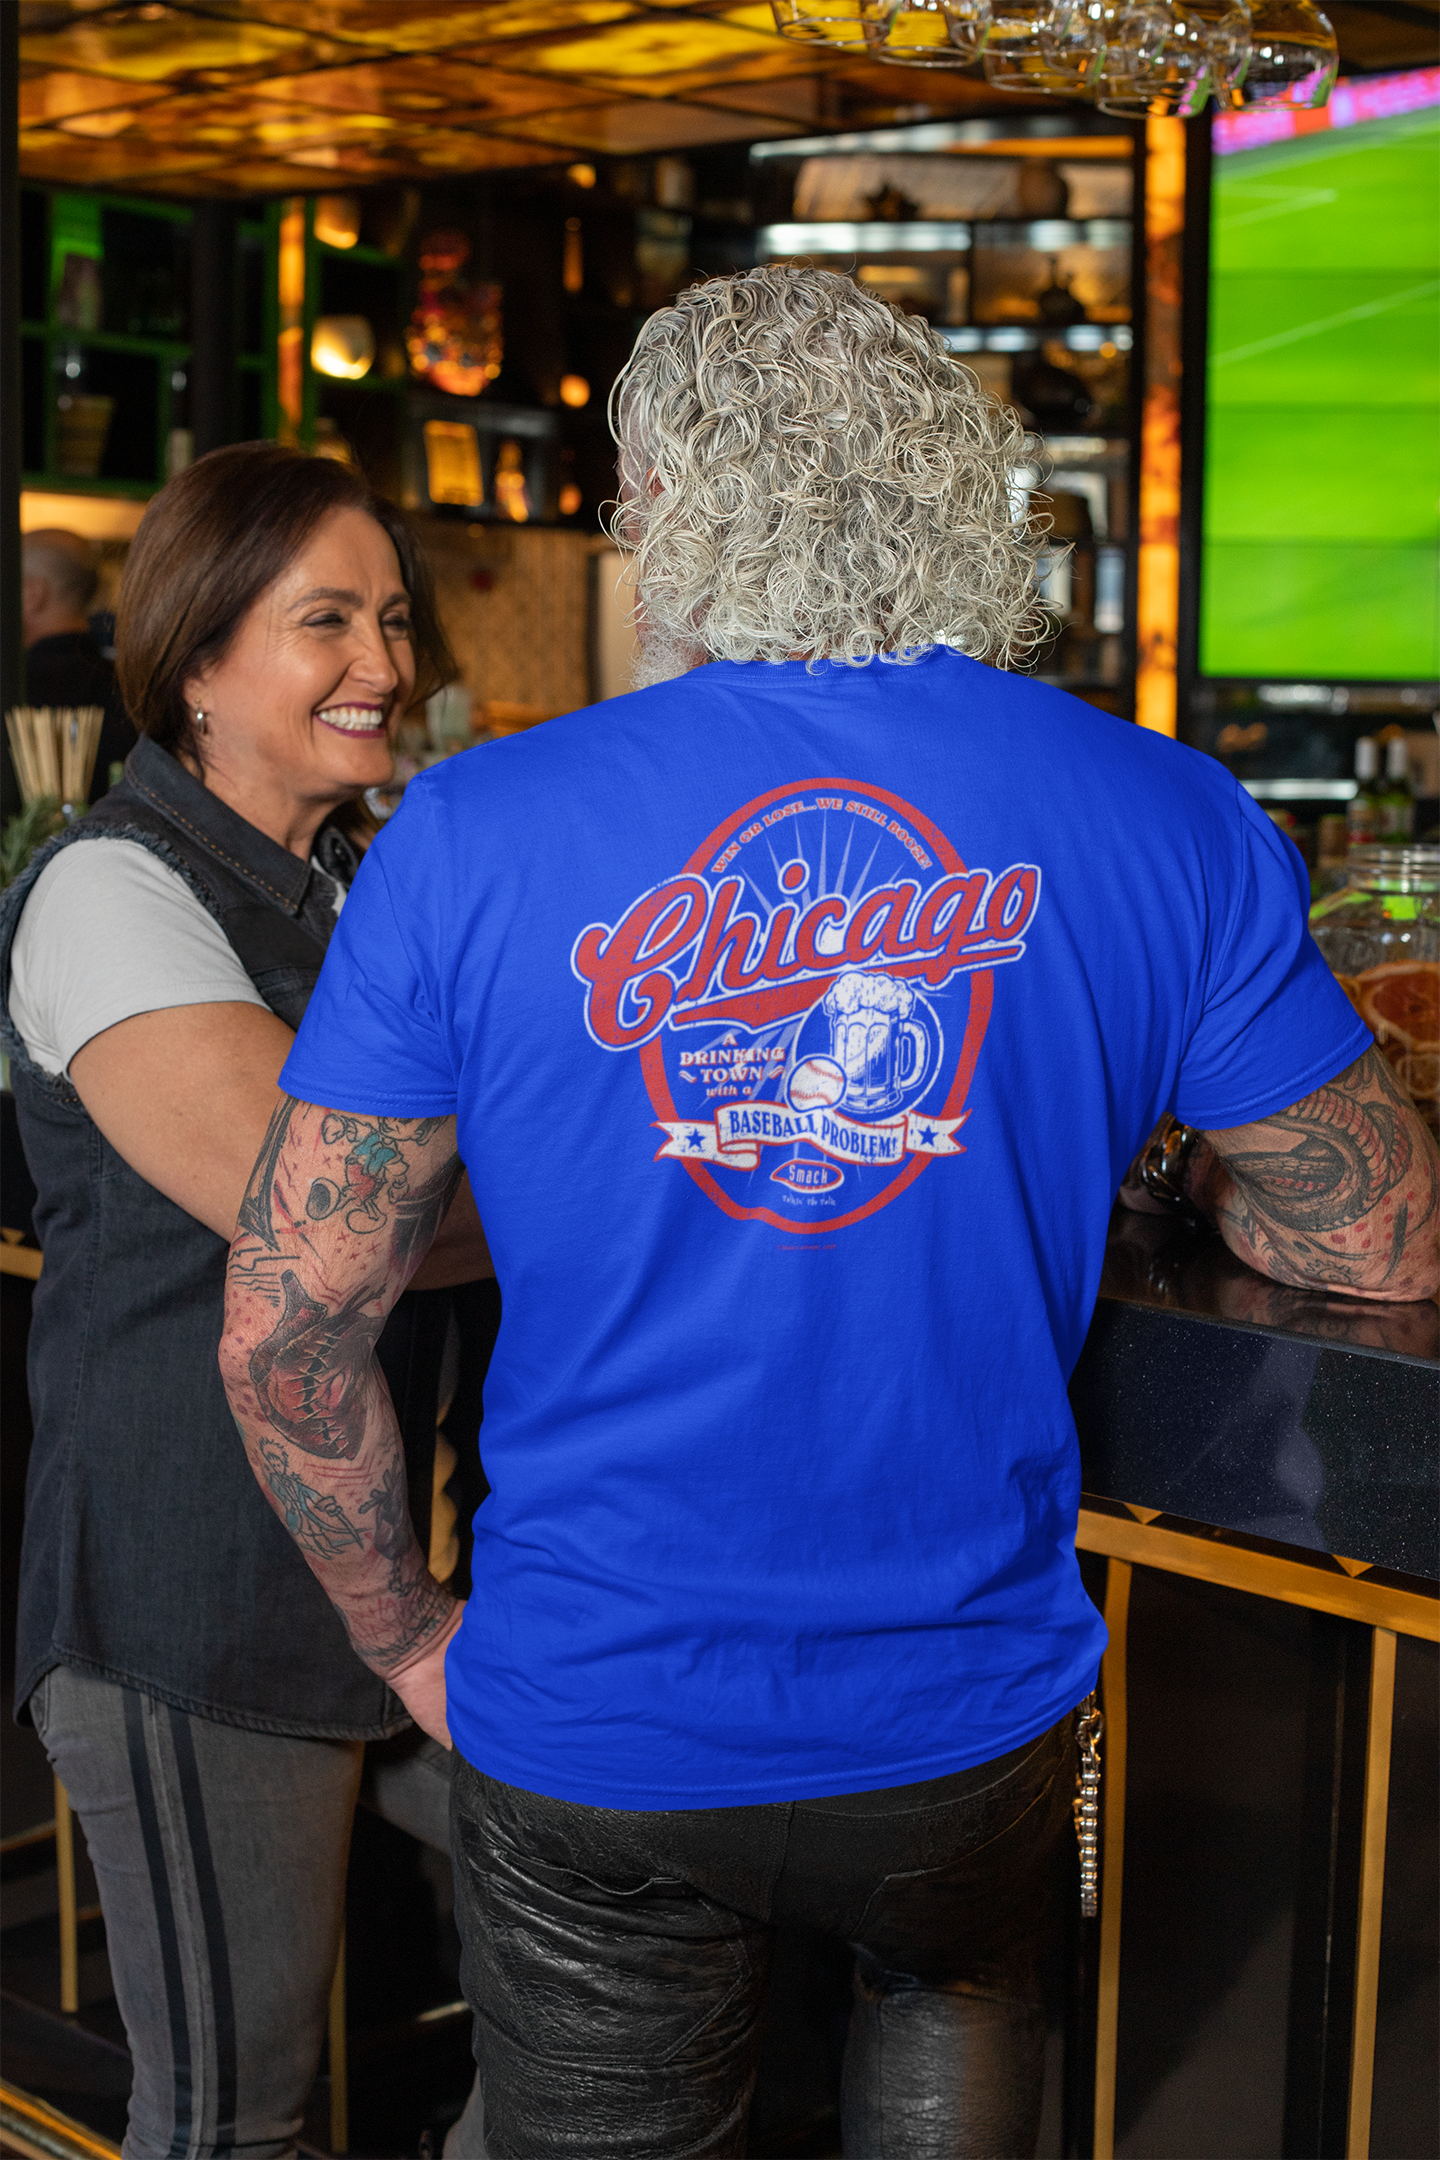 Smack Apparel Atlanta Baseball Fans | A Drinking Town with A Baseball Problem Shirt 3XL / Short Sleeve / Navy